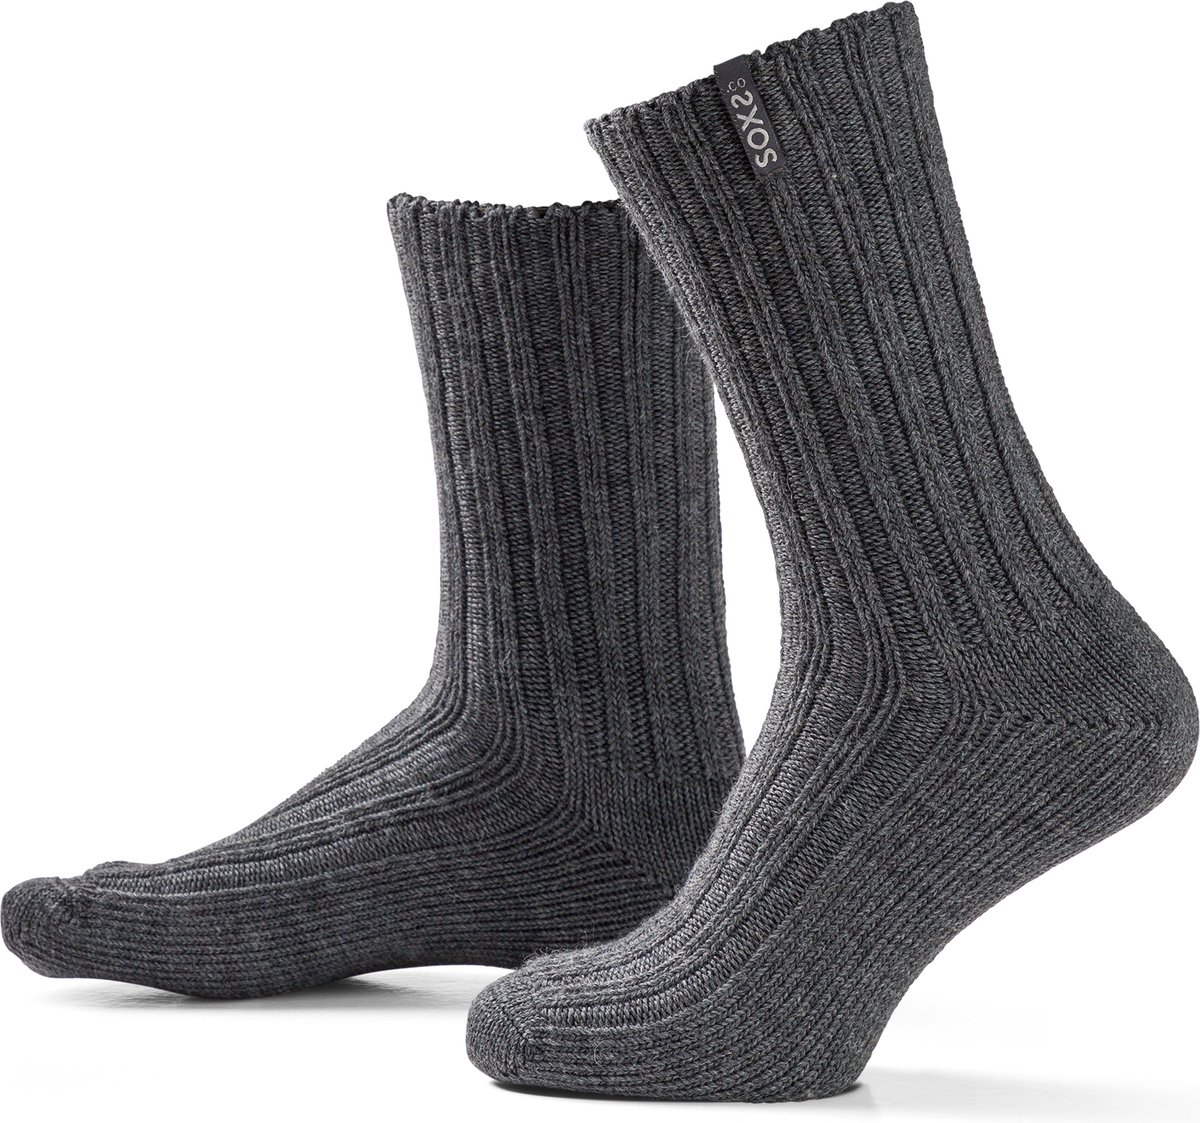 SOXS® Wollen sokken | SOX3533 | Donkergrijs | Kuithoogte | Maat 42-46 | Silver cloud label